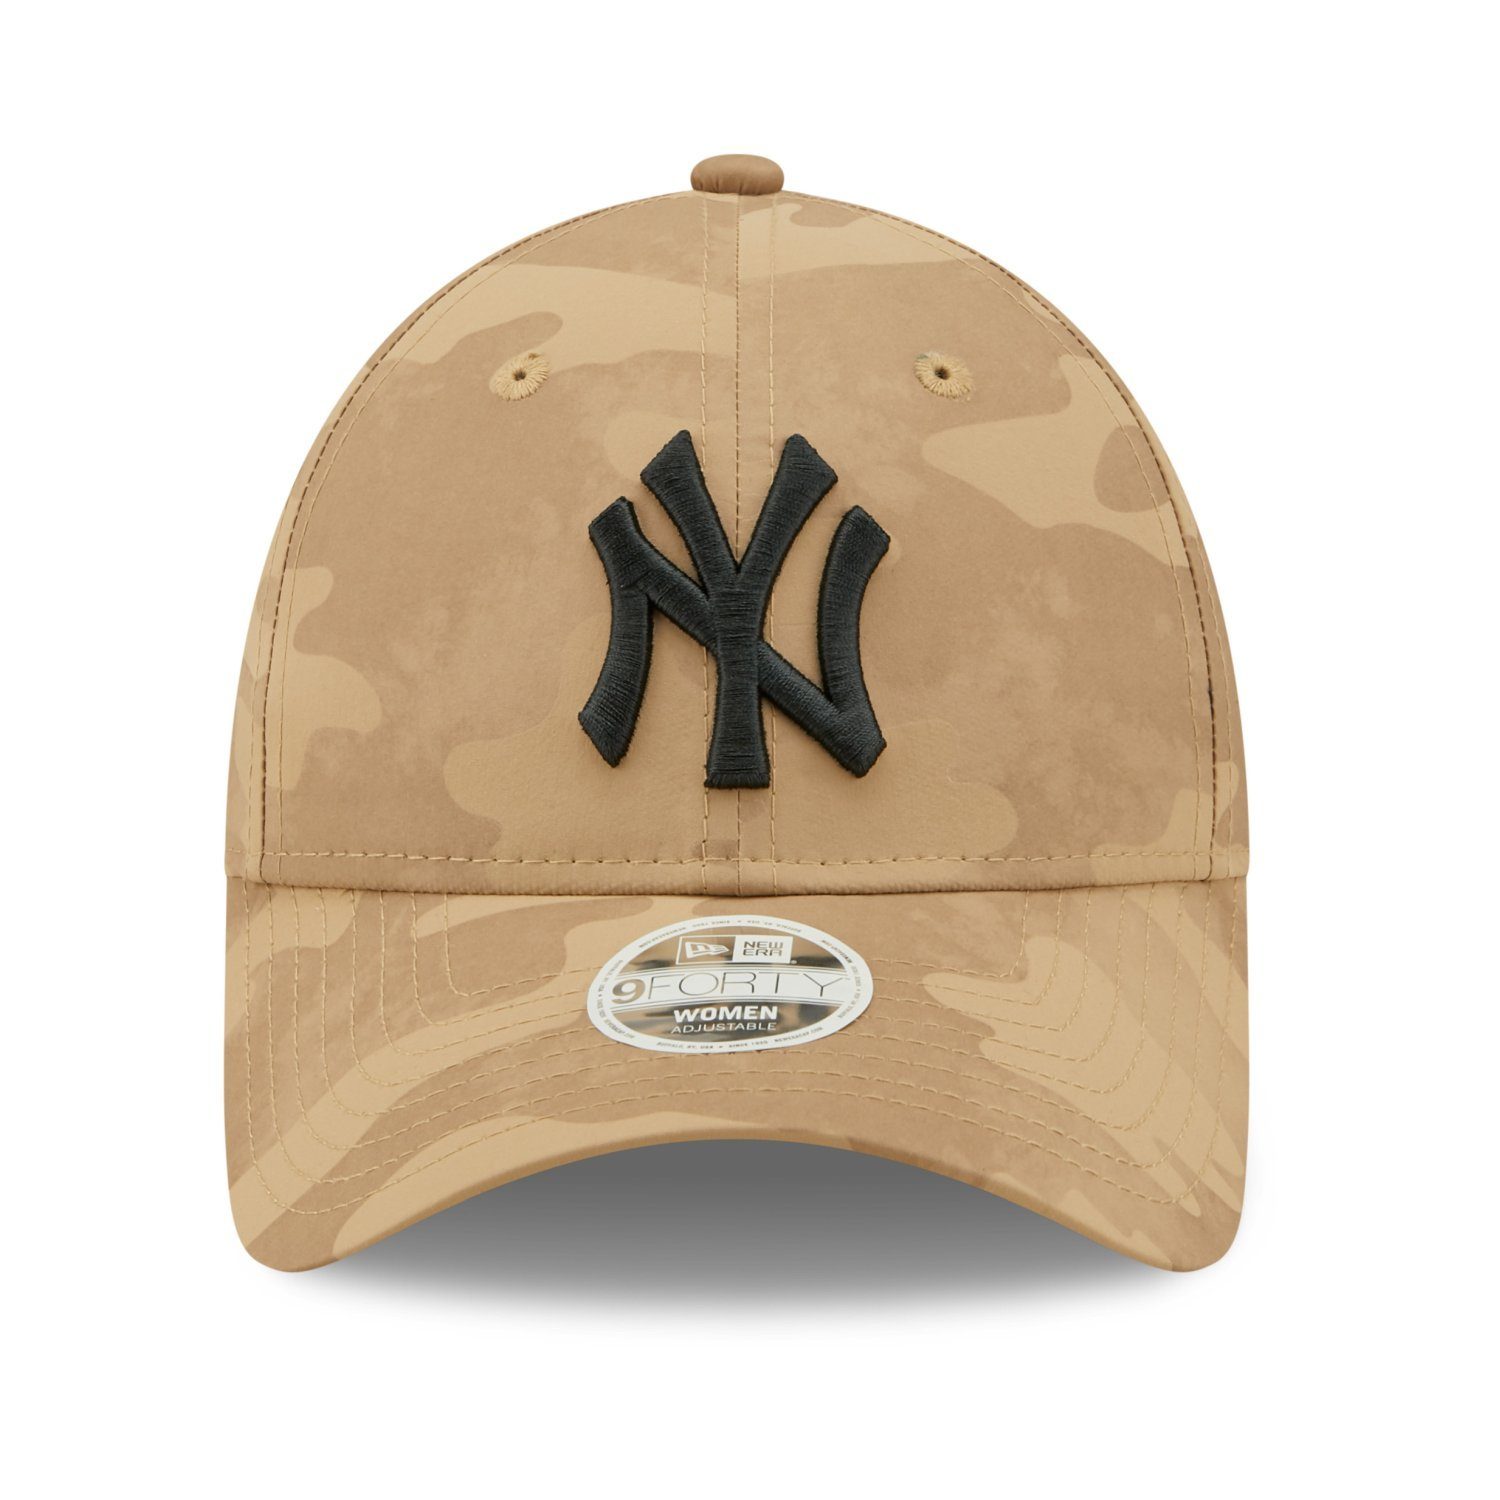 Yankees Baseball York Cap New 9Forty New Era